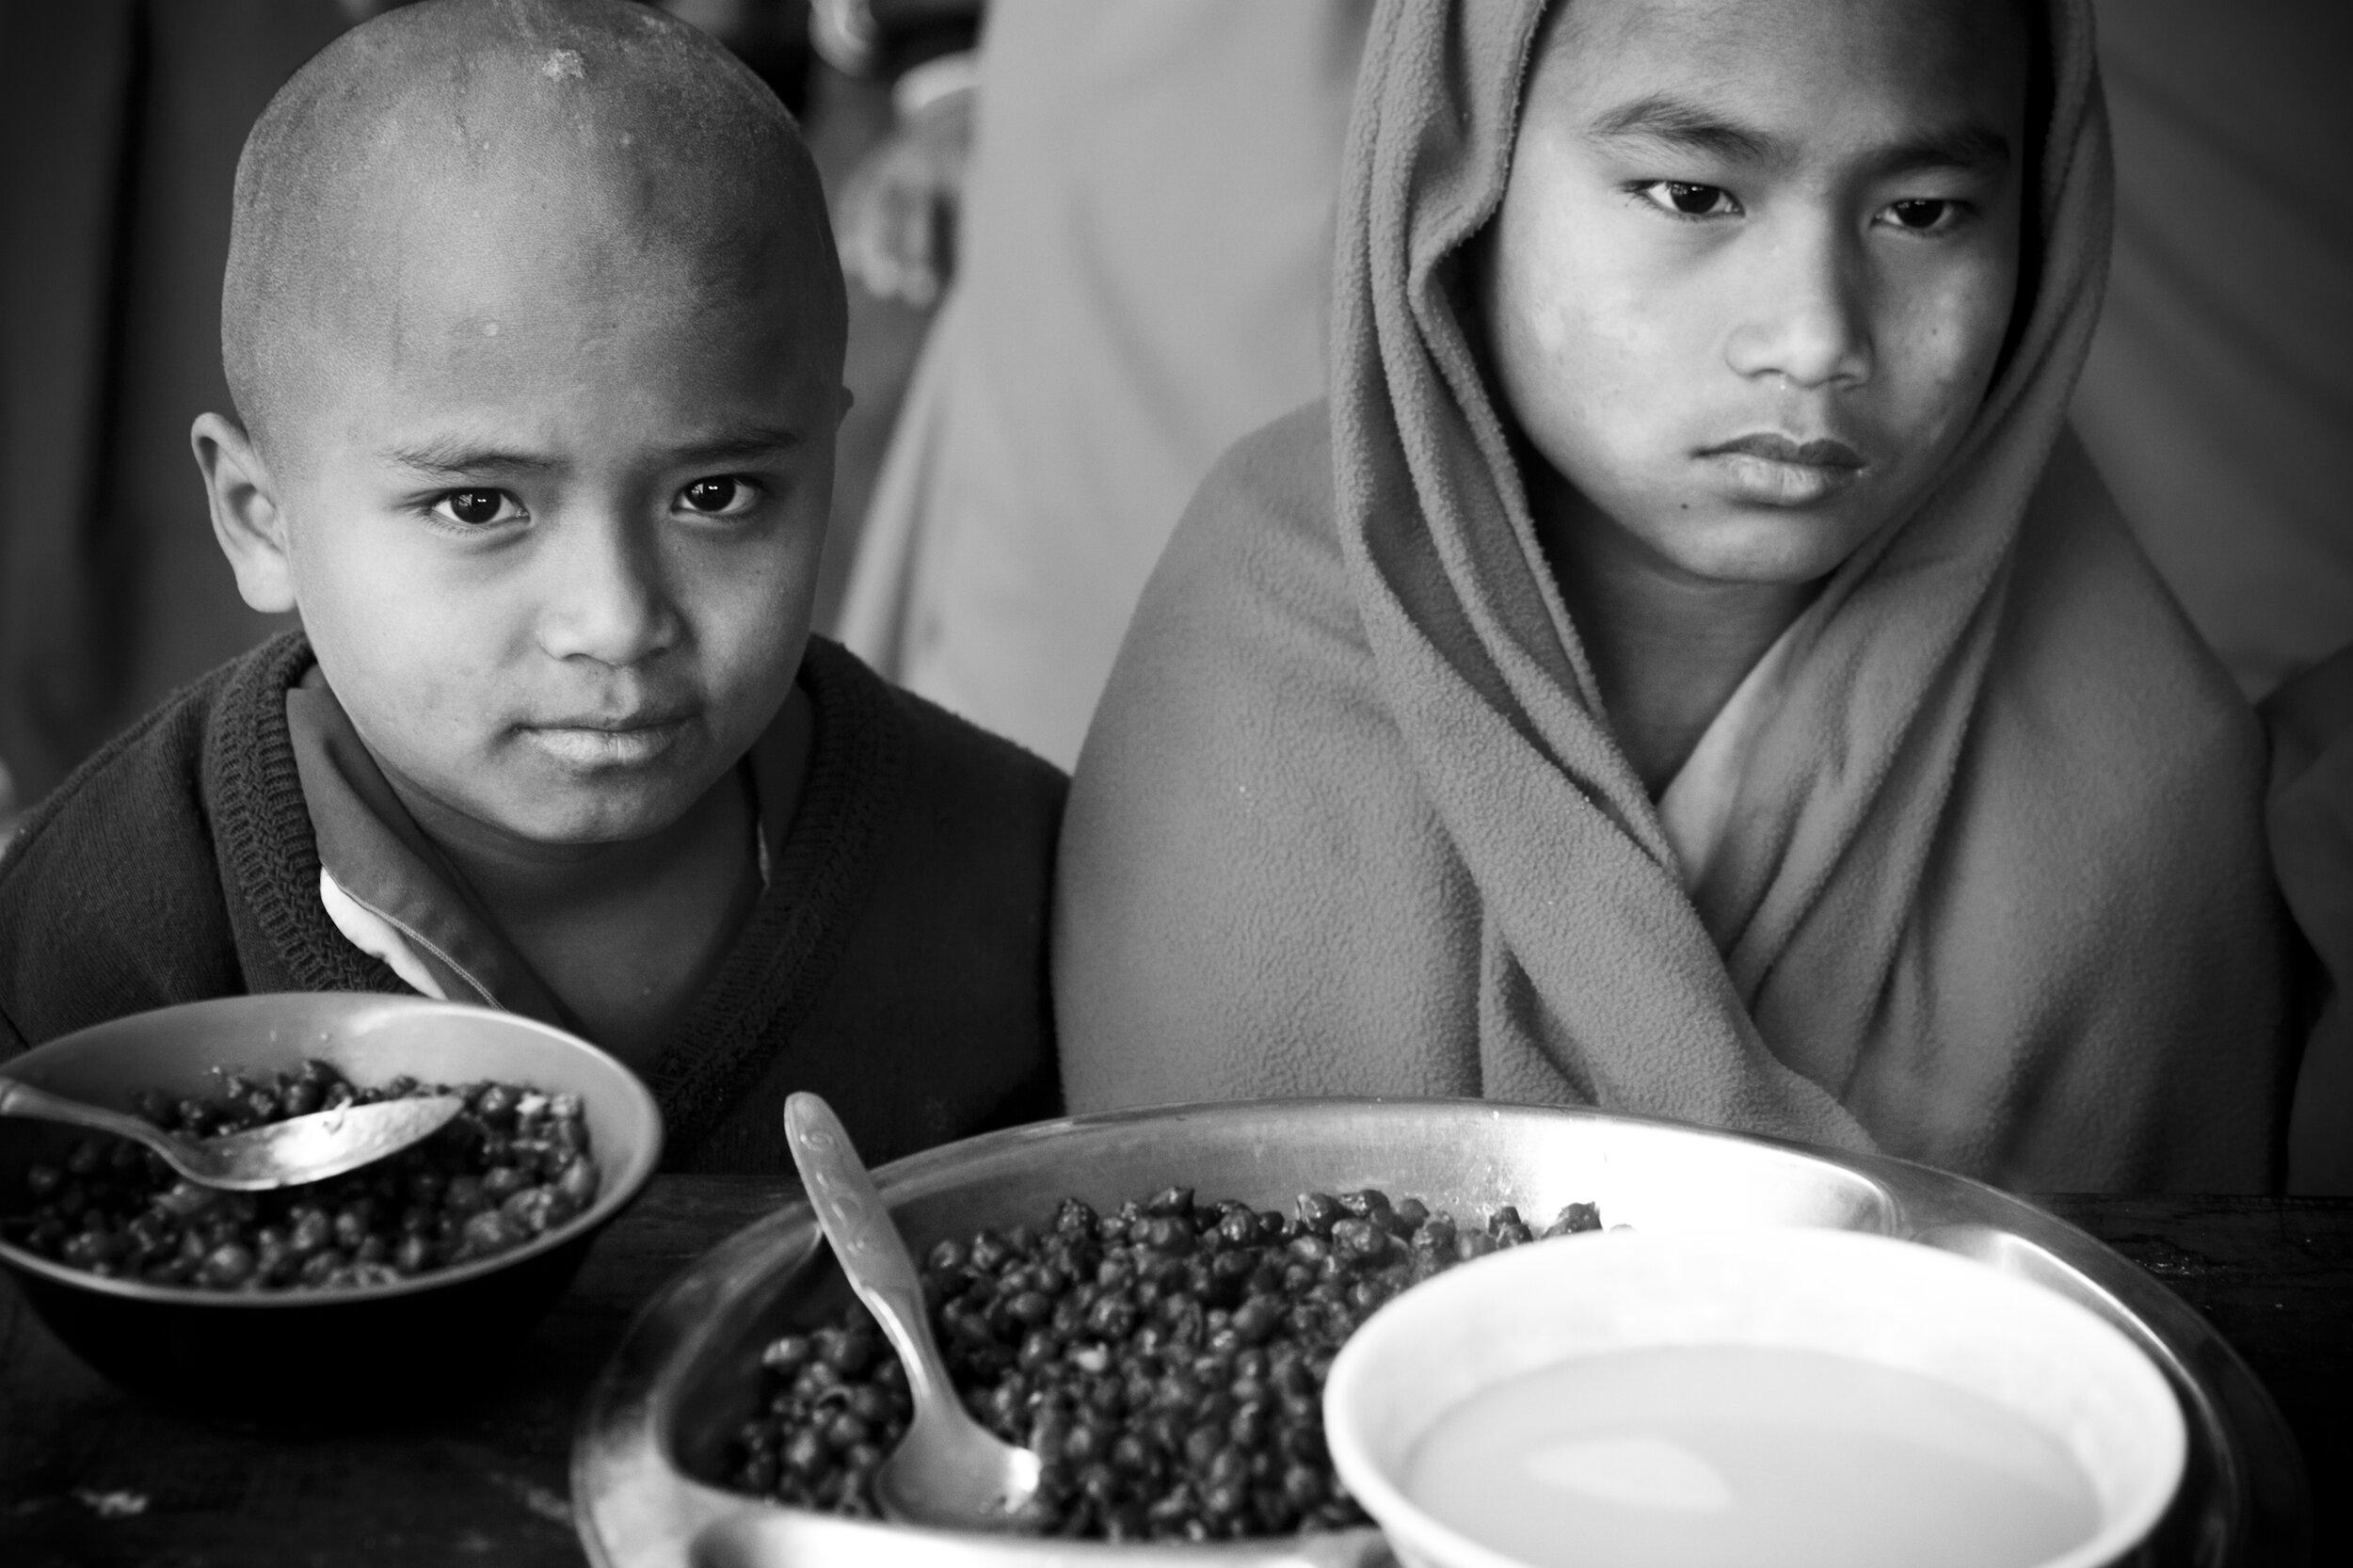  Two monks waiting for prayers to end before starting their delicious breakfast of black beans and Tibetan yak milk tea that keeps everyone warm, at Jovo Kadhampa monastery, Kathmandu, Nepal, 2014 